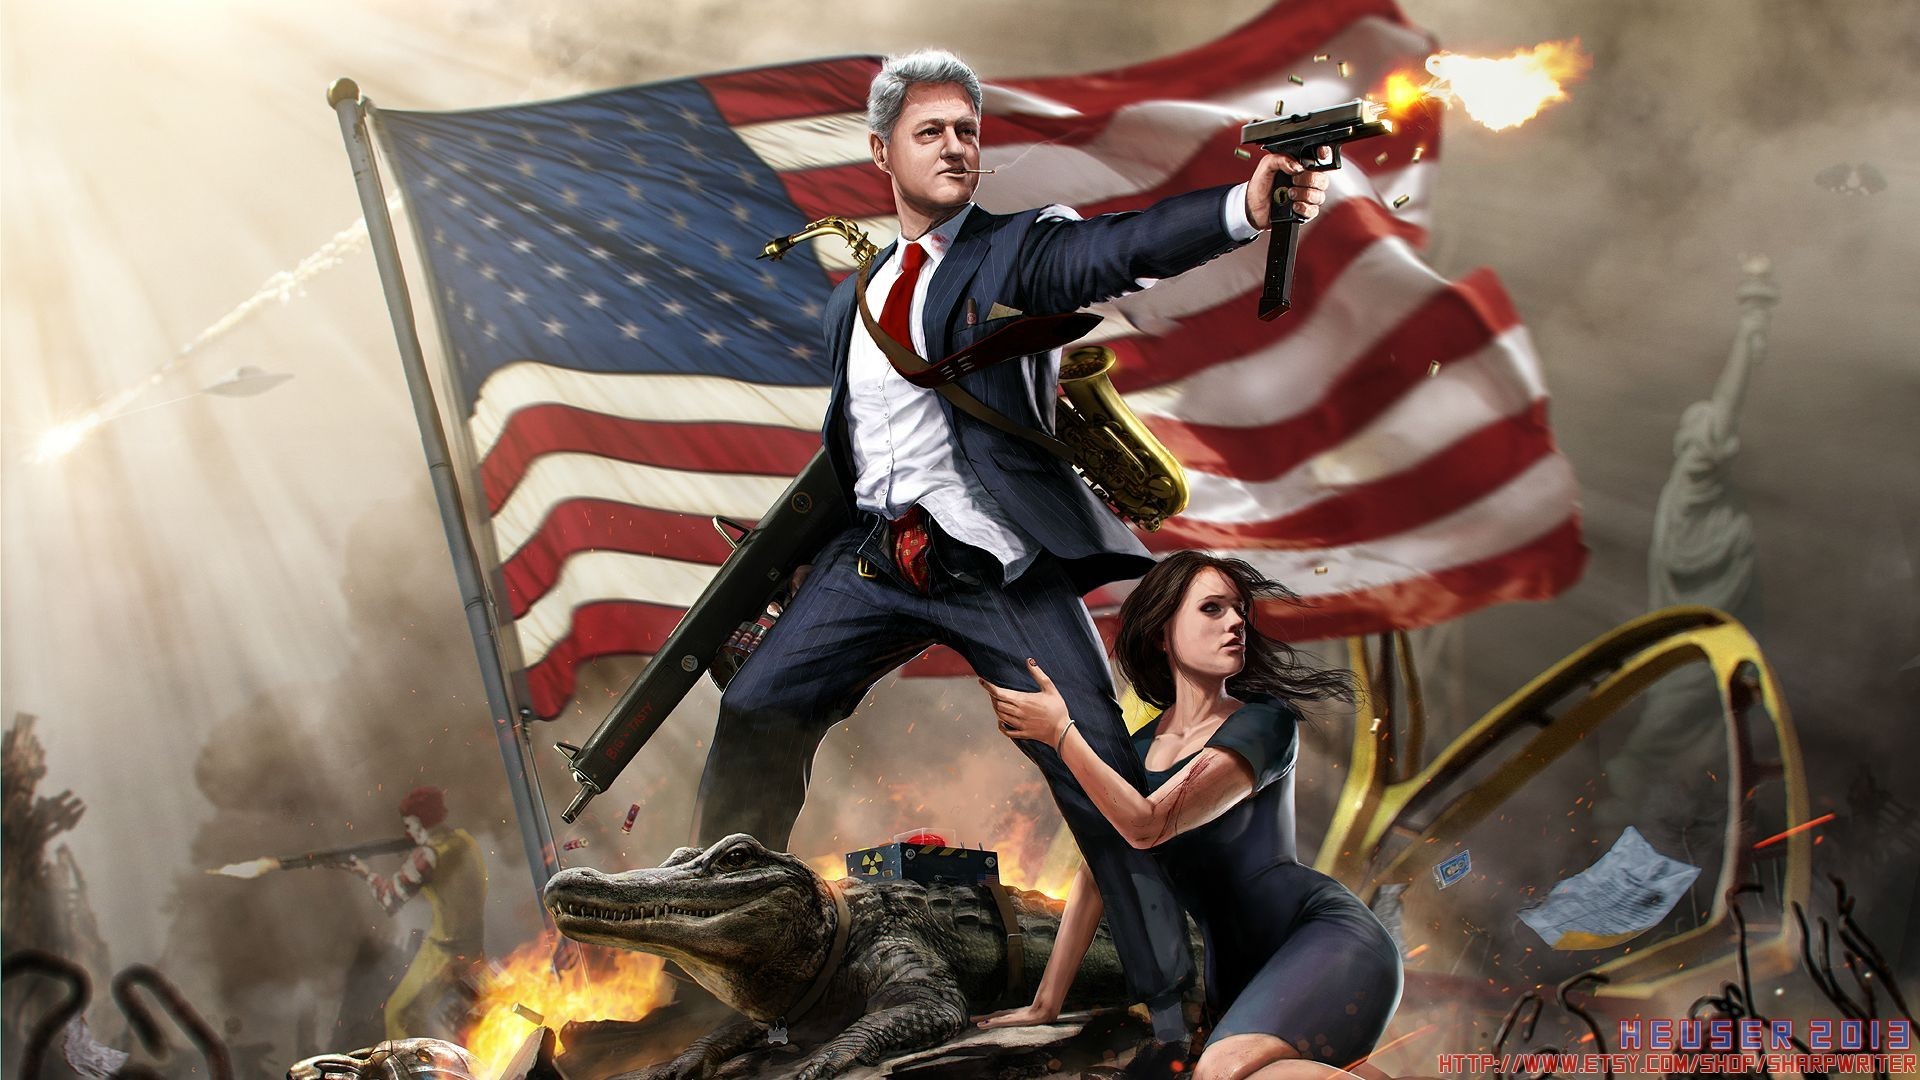 7 Badass Digital Art Wallpapers of United States Presidents | DigitalArt.io